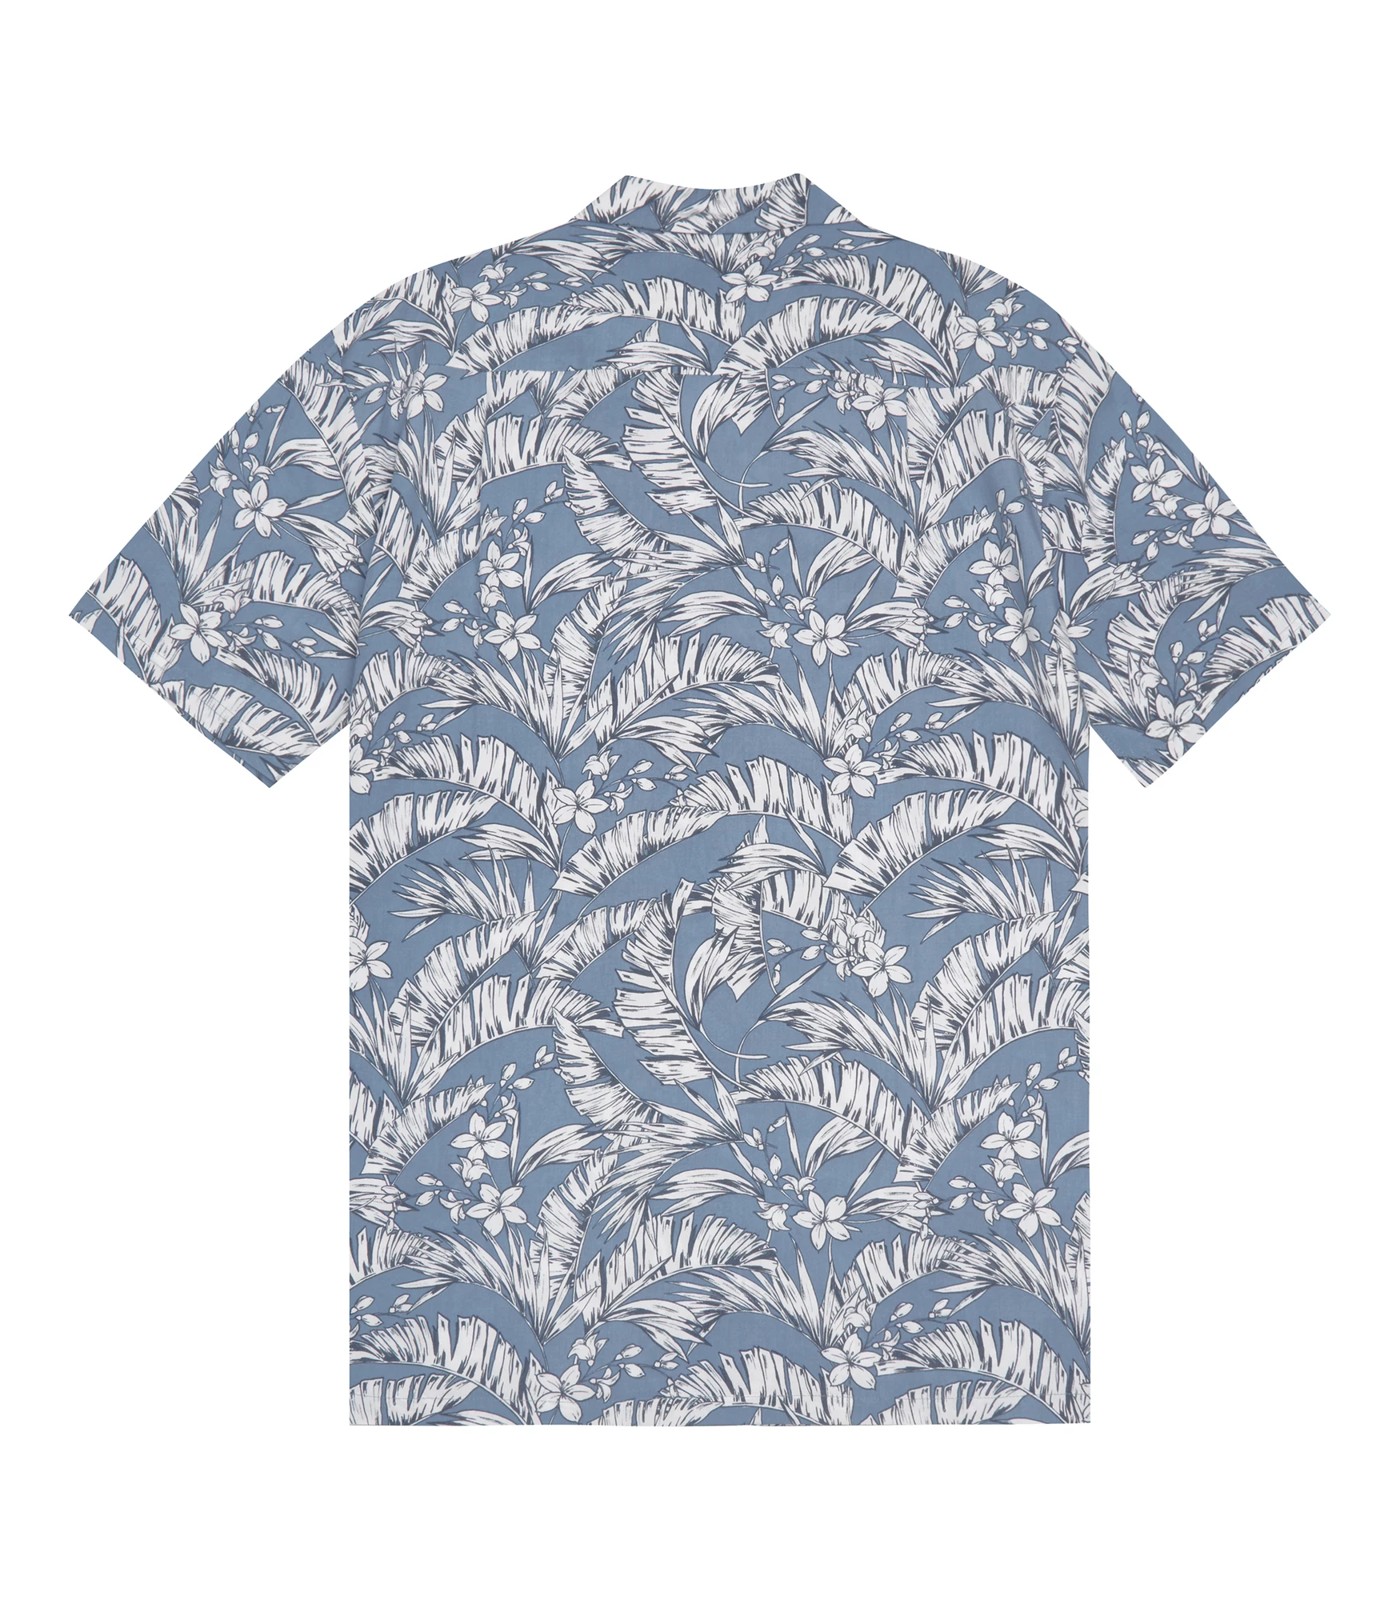 Piping Hot Palm Flower Print Resort Shirt | Target Australia